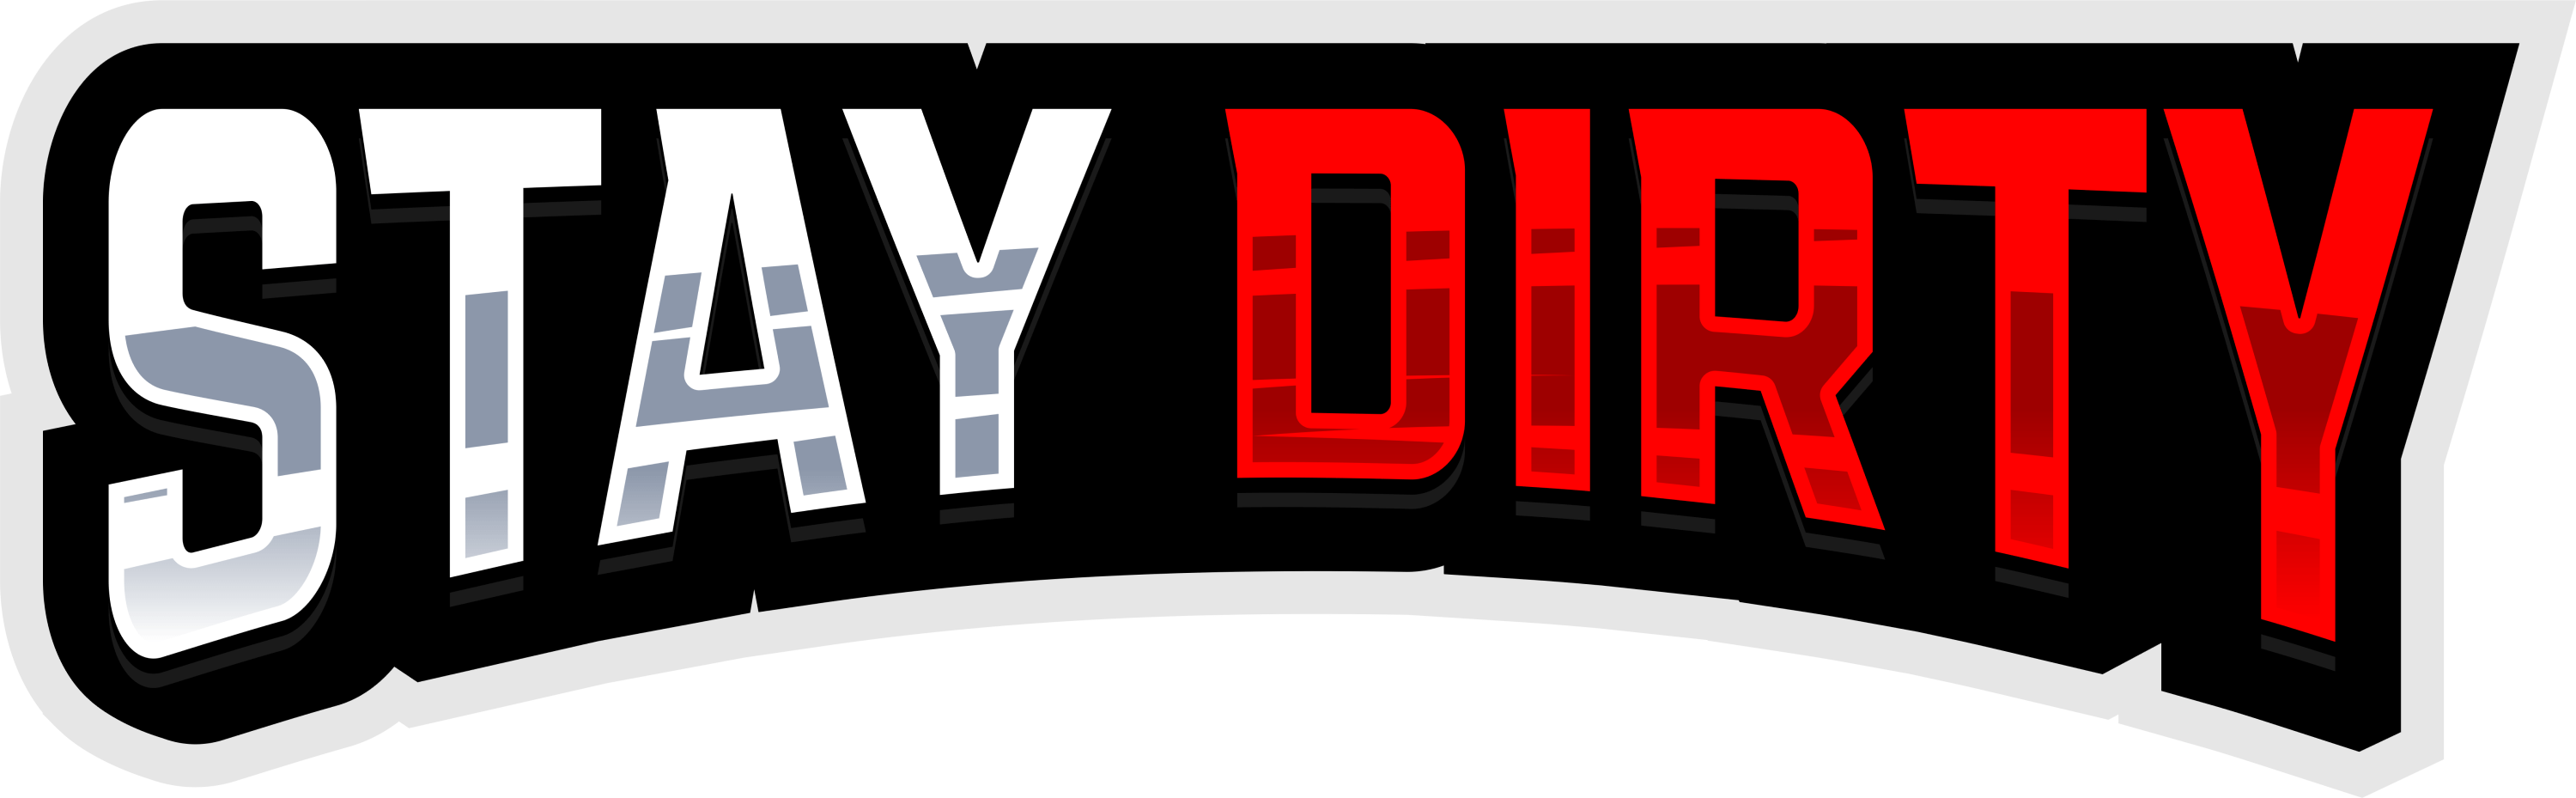 Stay Dirty Sticker - G Life UTV Shop Parts